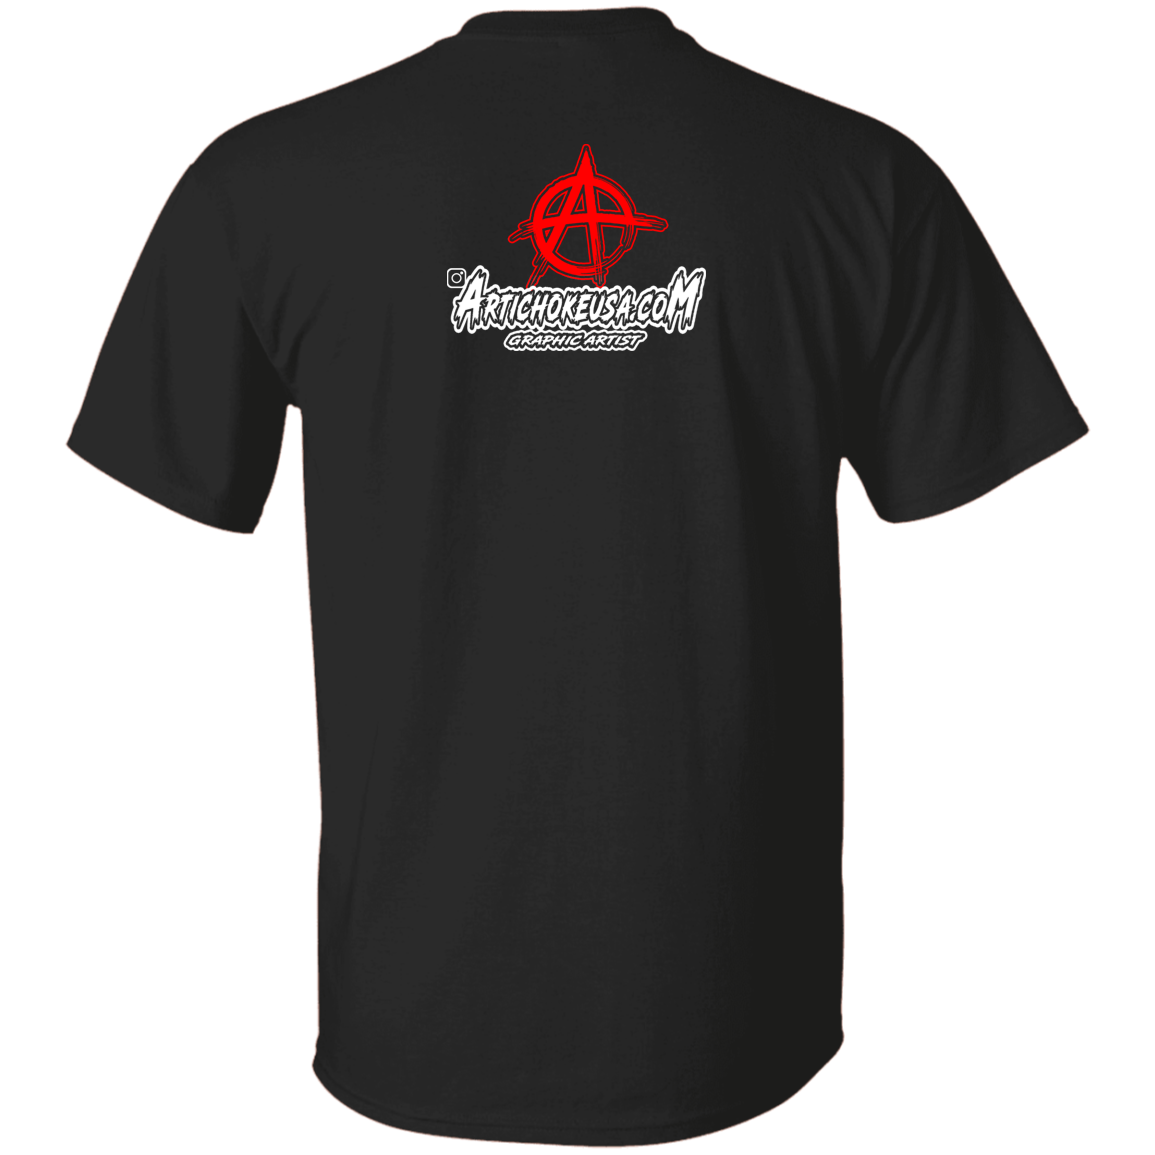 ArtichokeUSA Custom Design. RUN ART.  RUN DMC Parody. 5.3 oz. T-Shirt